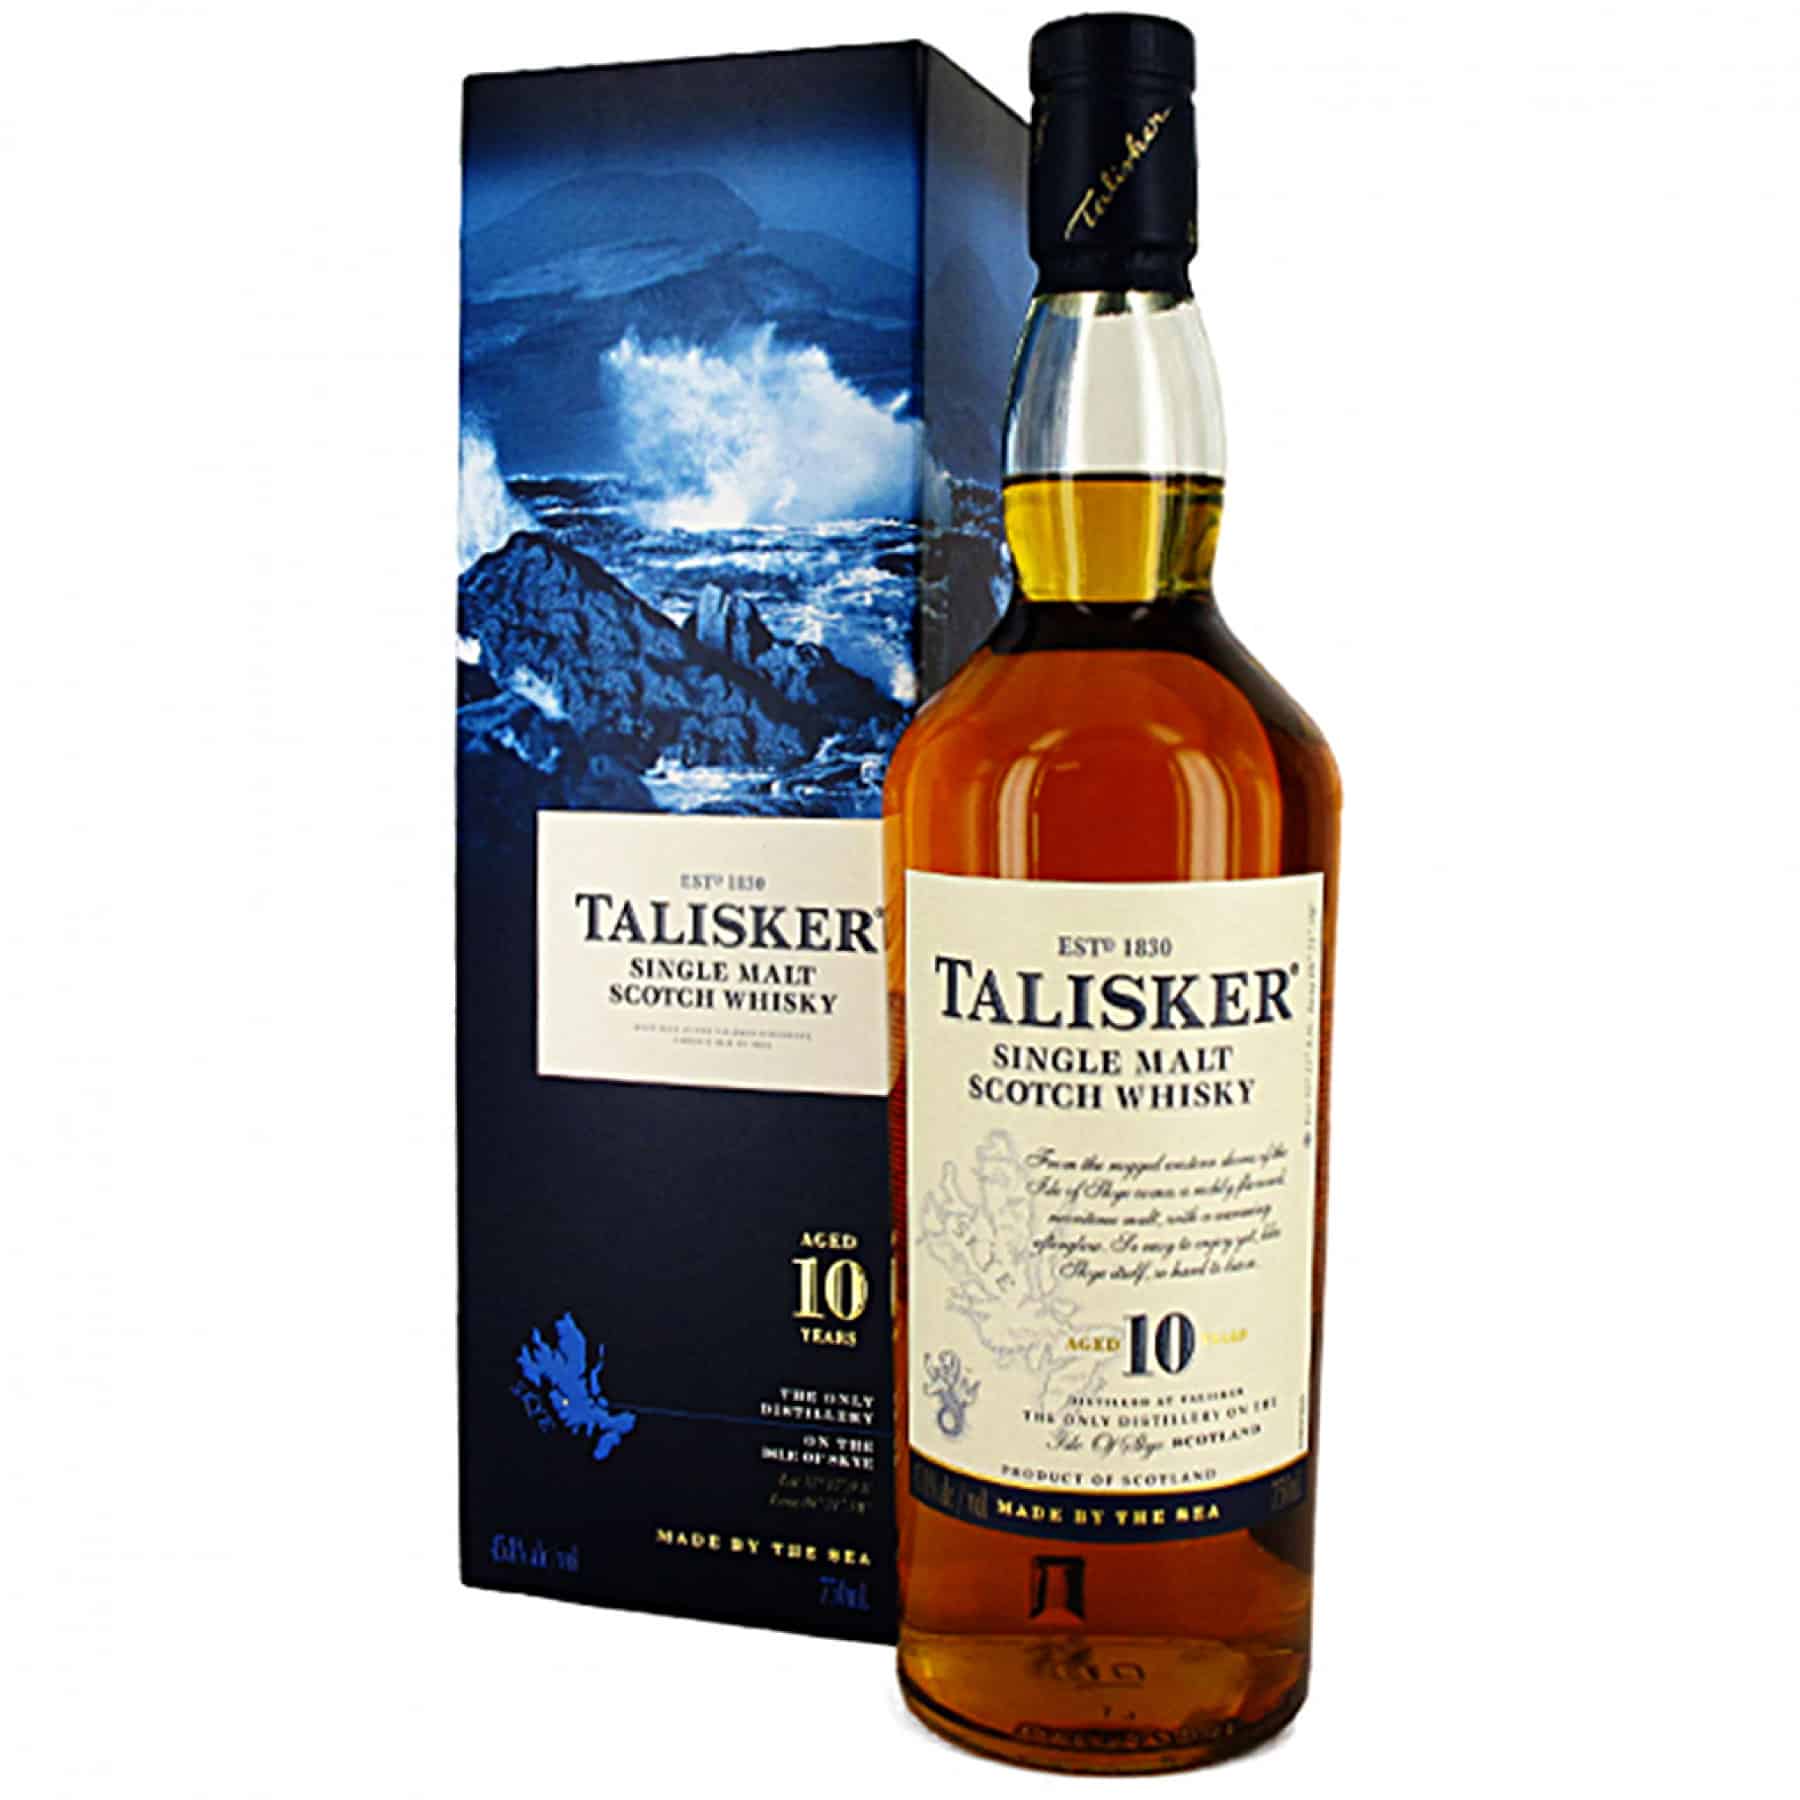 Single malt 10. Талискер сингл Молт 10. Talisker Single Malt Scotch Whisky 10. Виски Single Malt 10 years. Talisker 10 Single Malt.